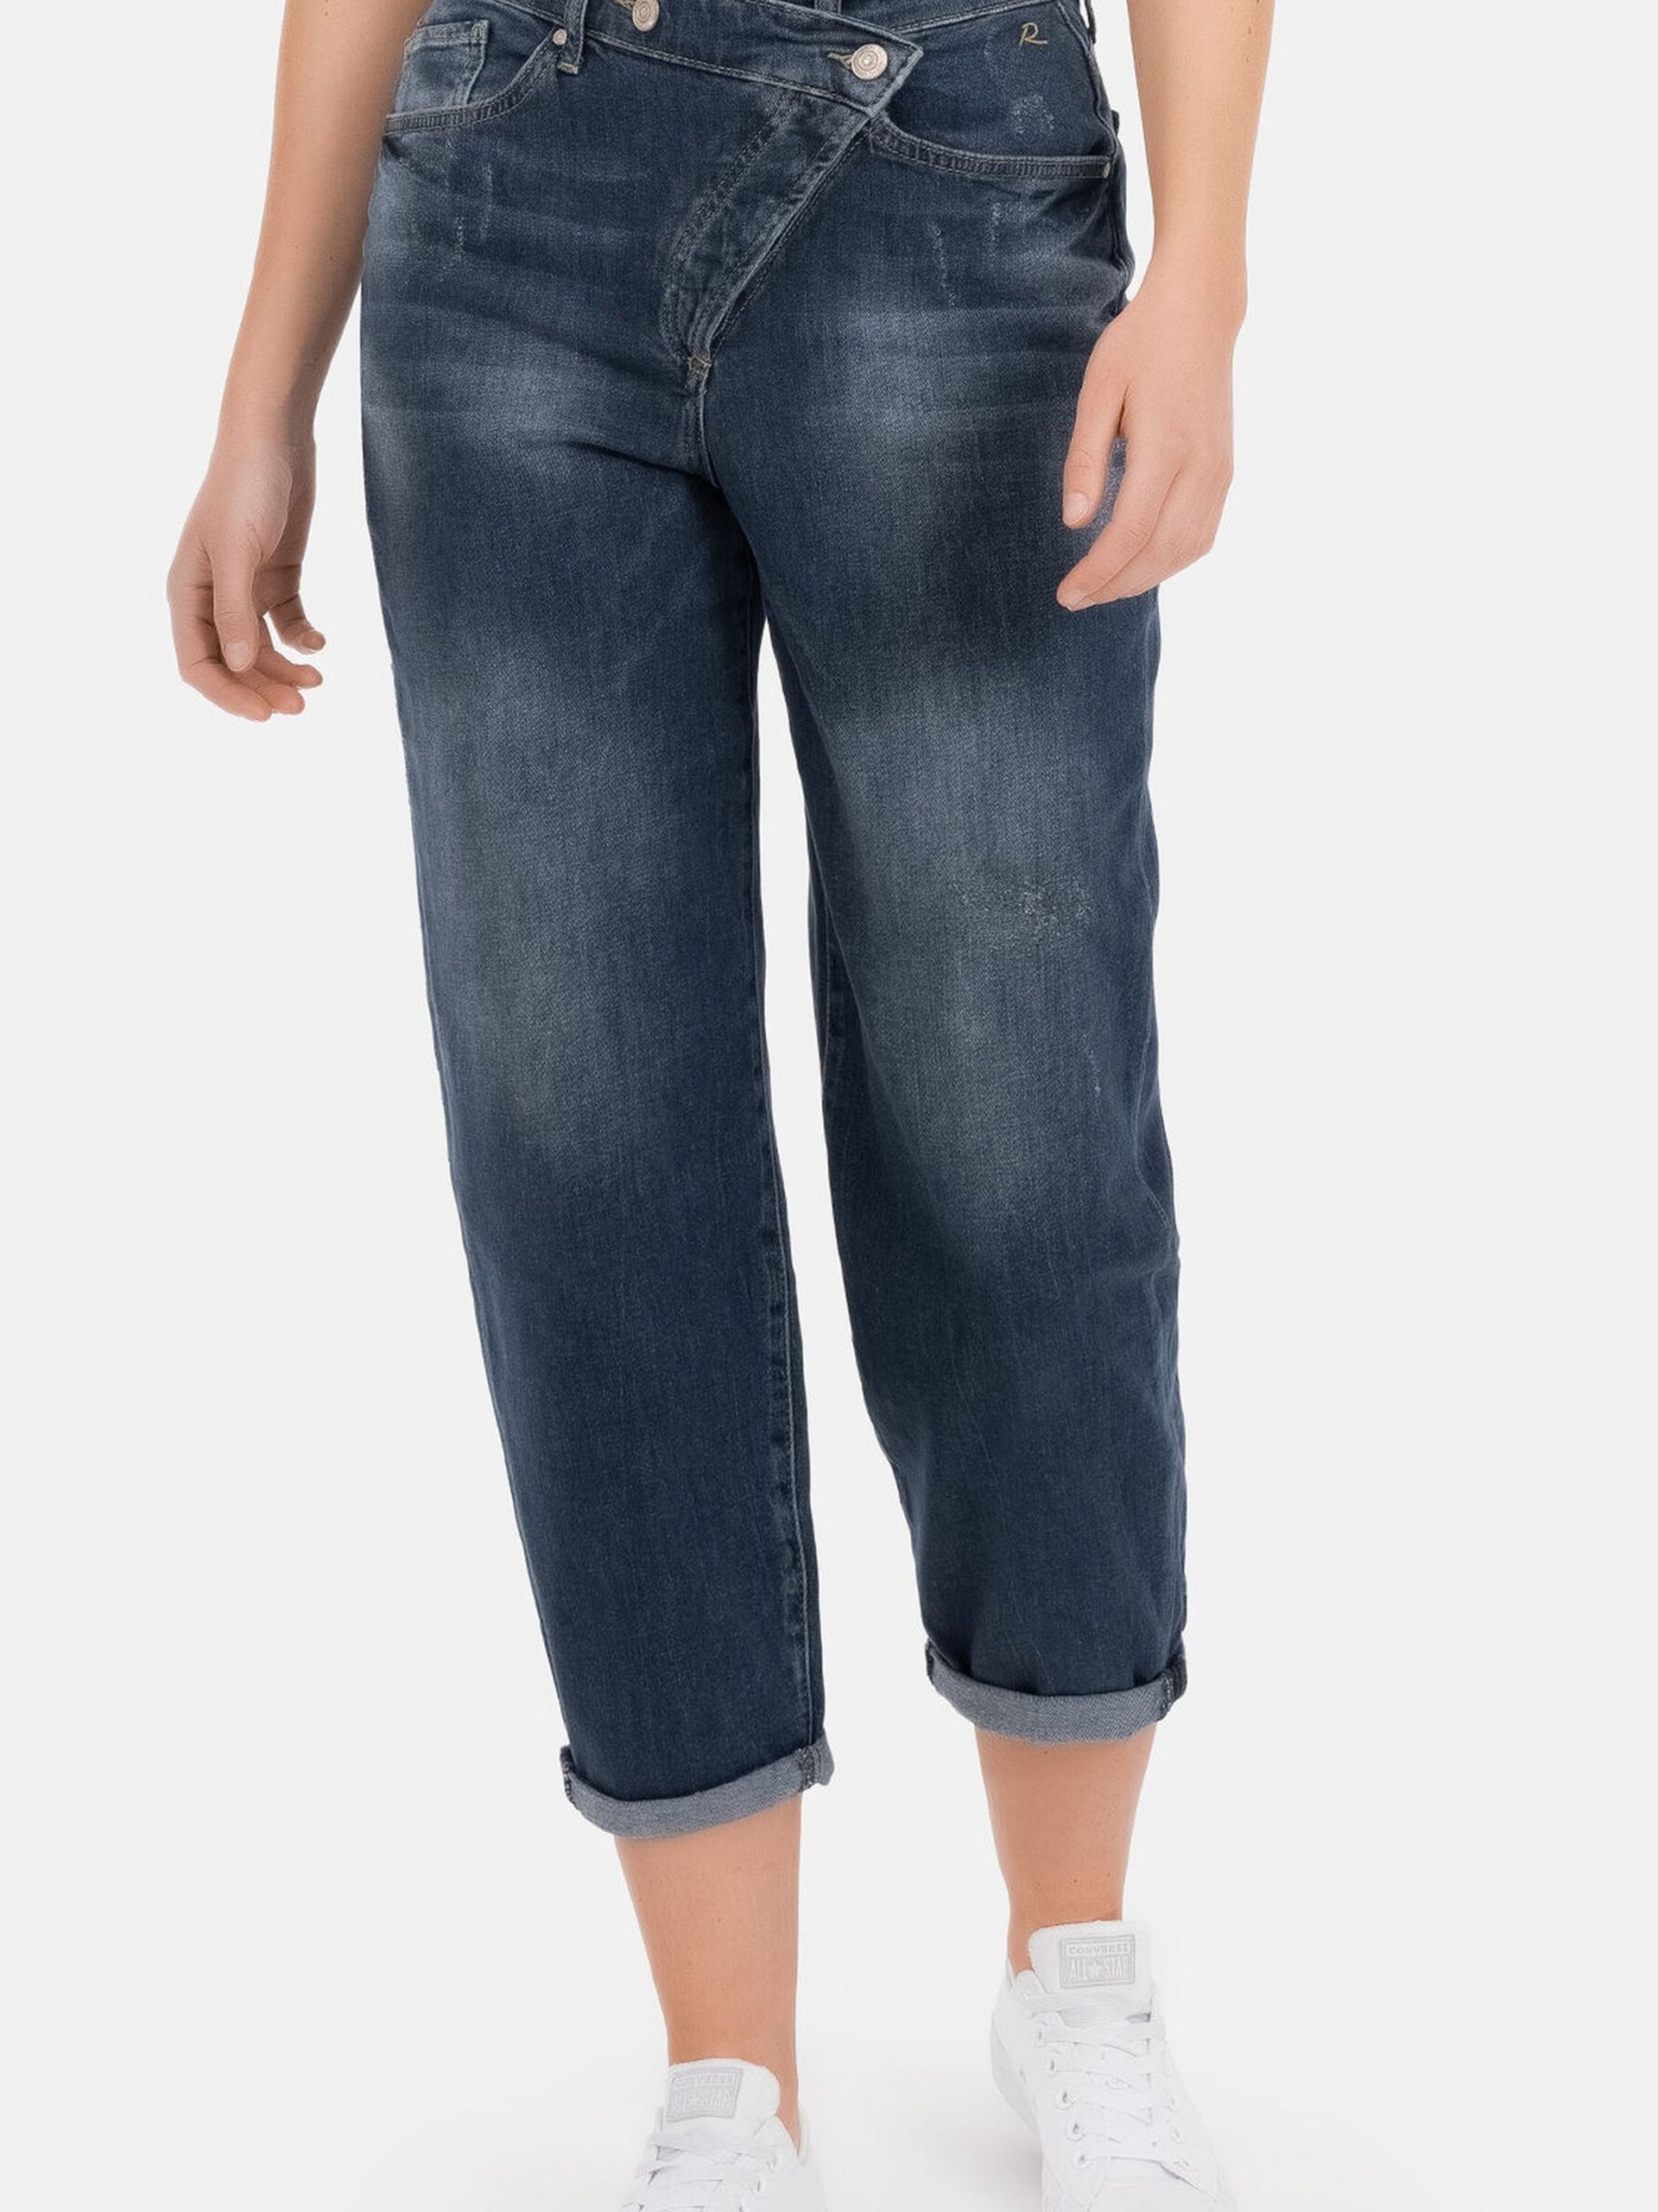 Gianna Damen RECOVER online pants kaufen 7/8-Jeans -